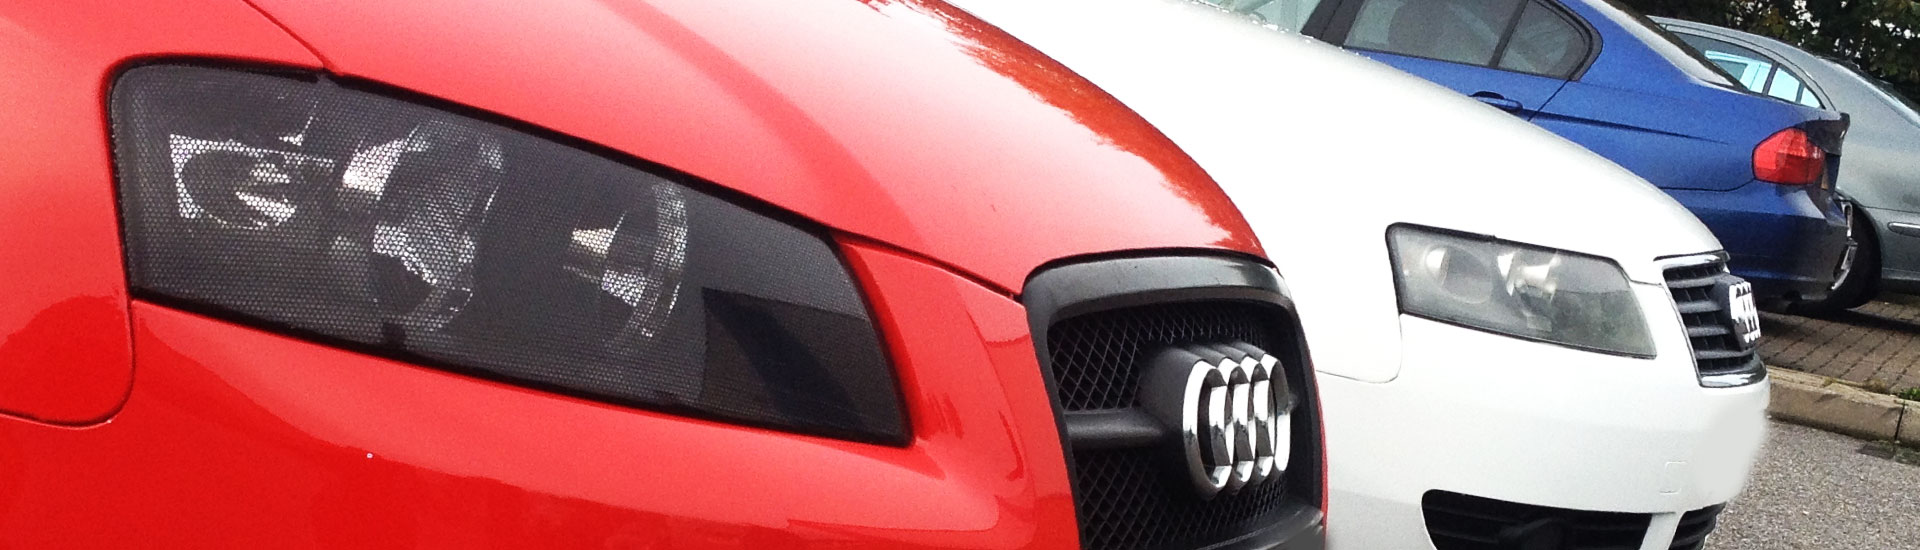 Audi Headlight Tint Covers